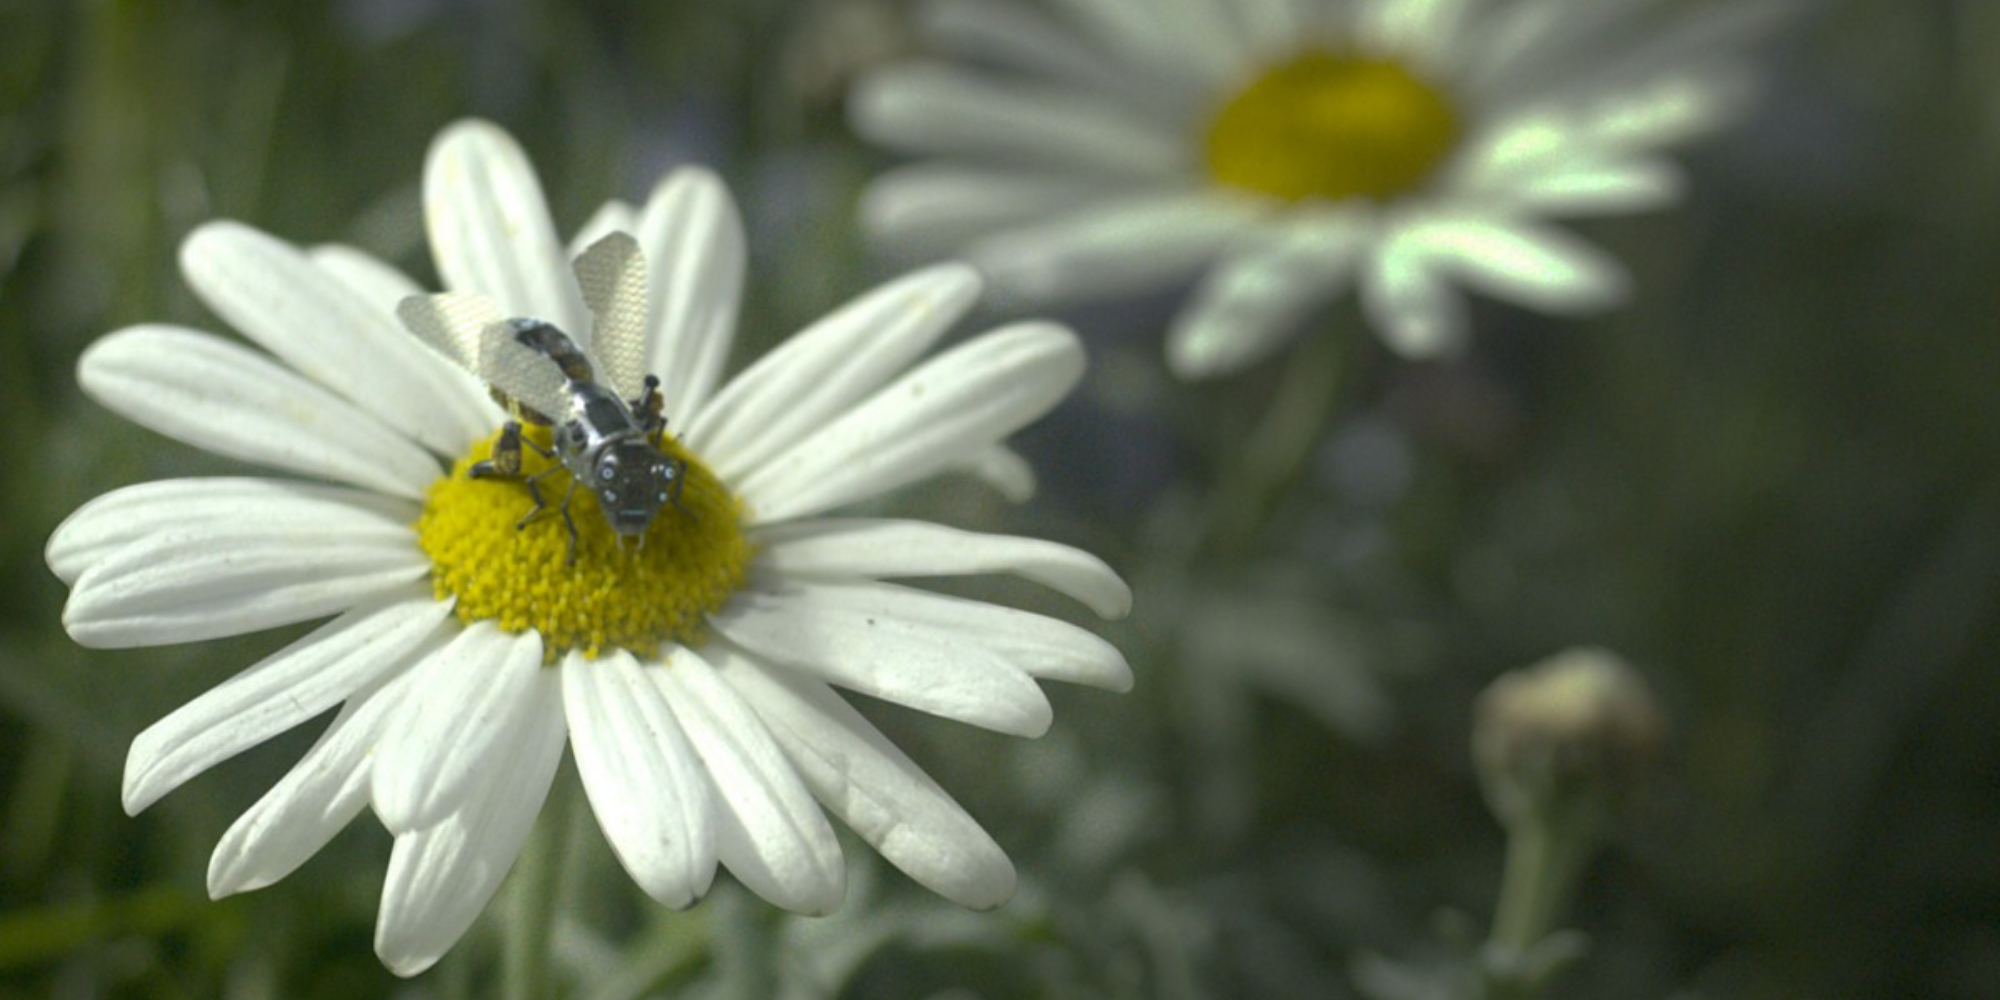 blackmirrorhatedinthenation nano bee sits on a flower